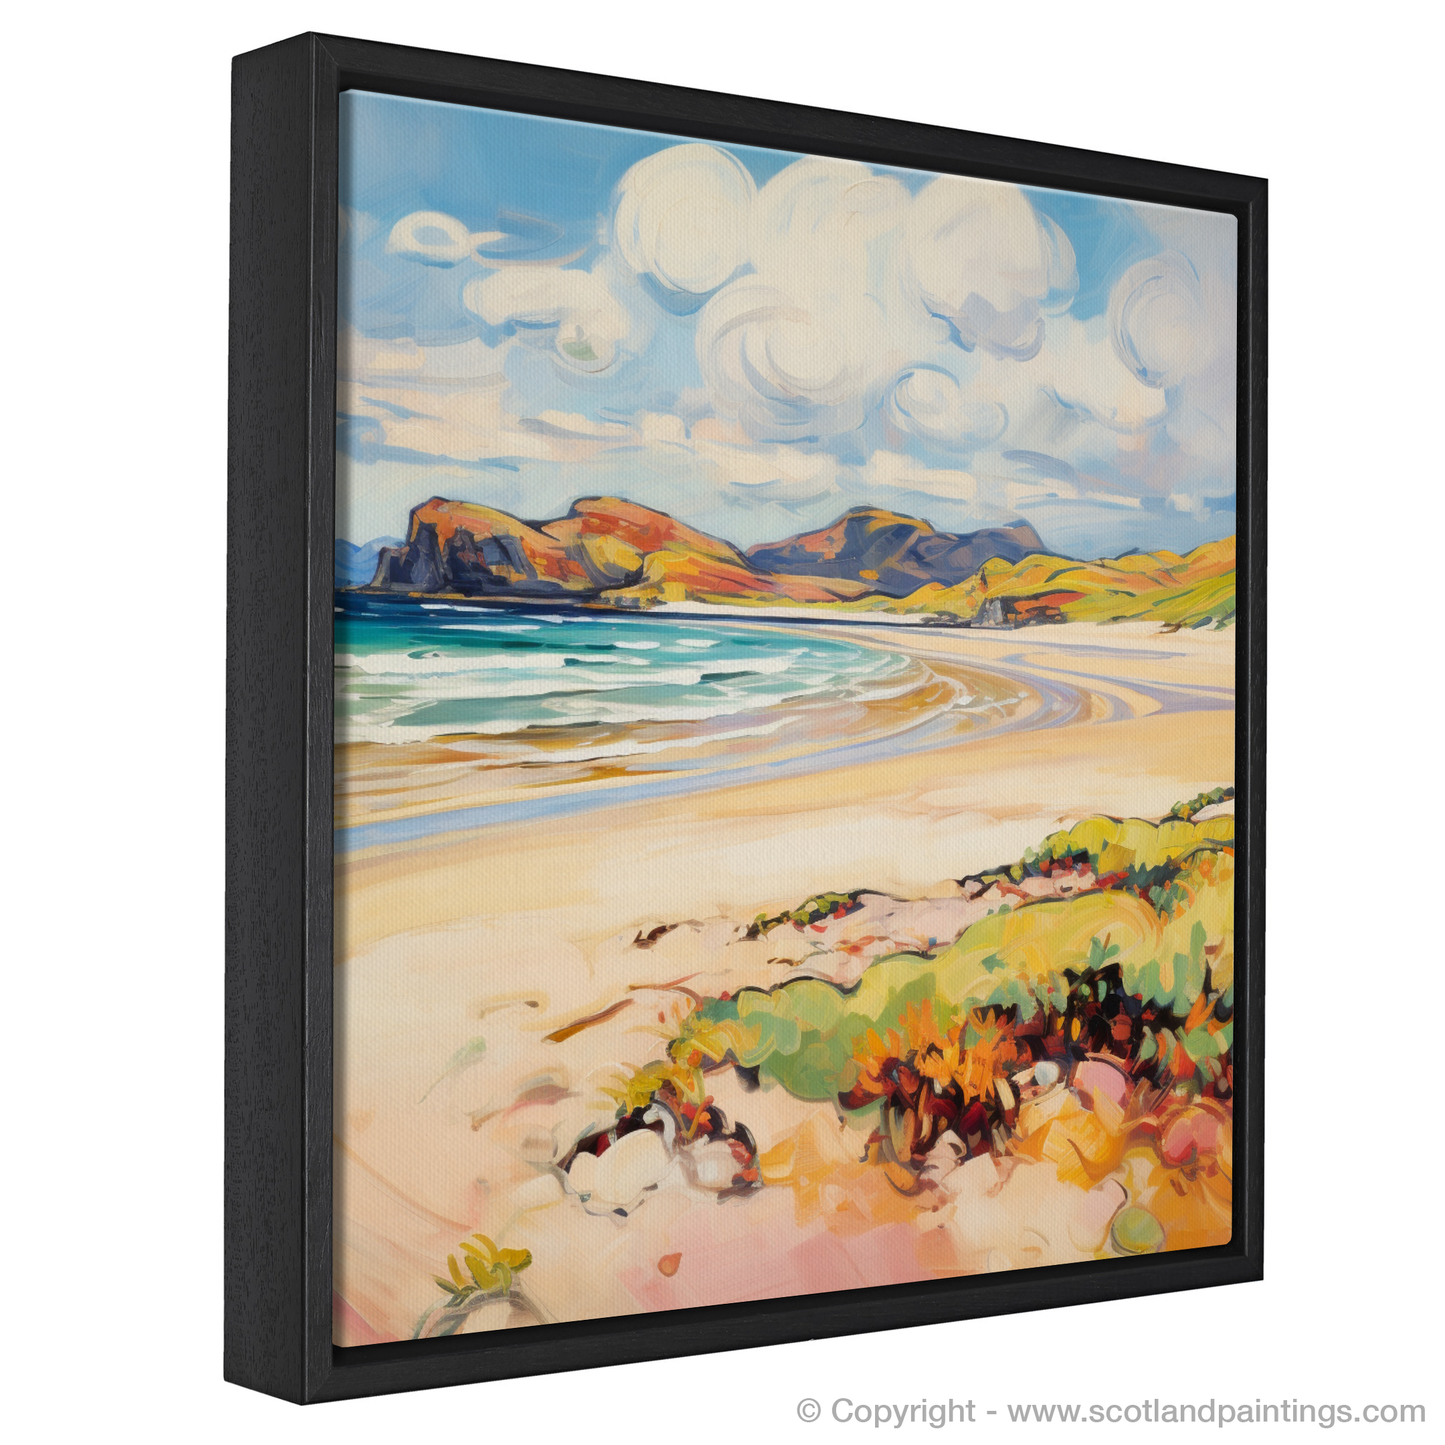 Painting and Art Print of Sandwood Bay, Sutherland in summer entitled "Summer Fervour at Sandwood Bay".